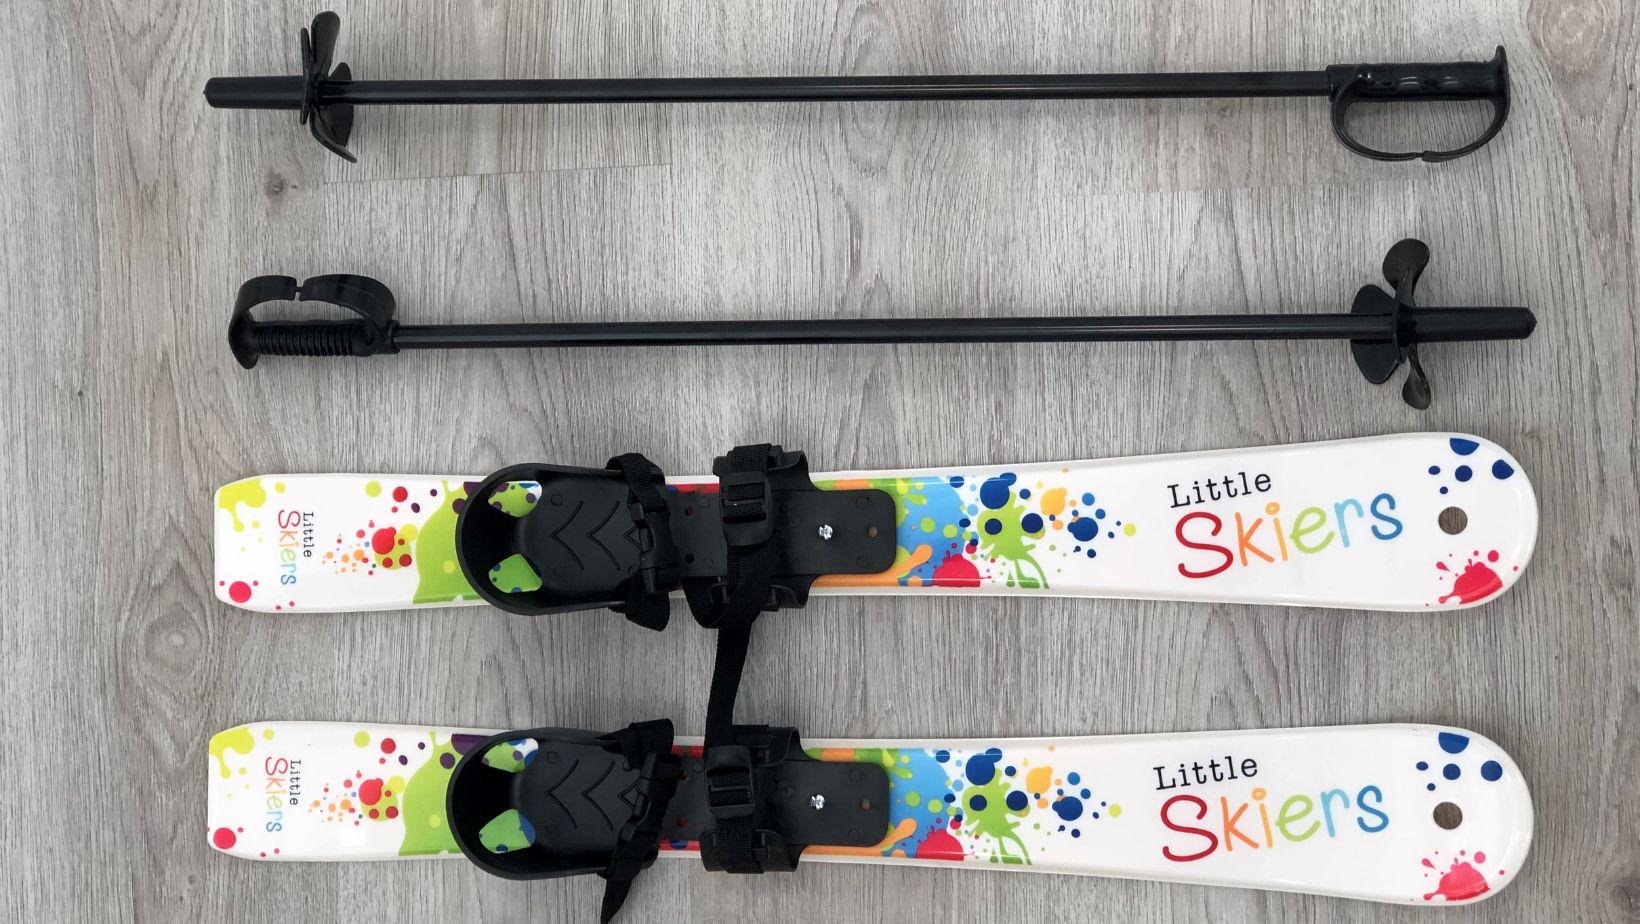 Plastic Skis For Kids